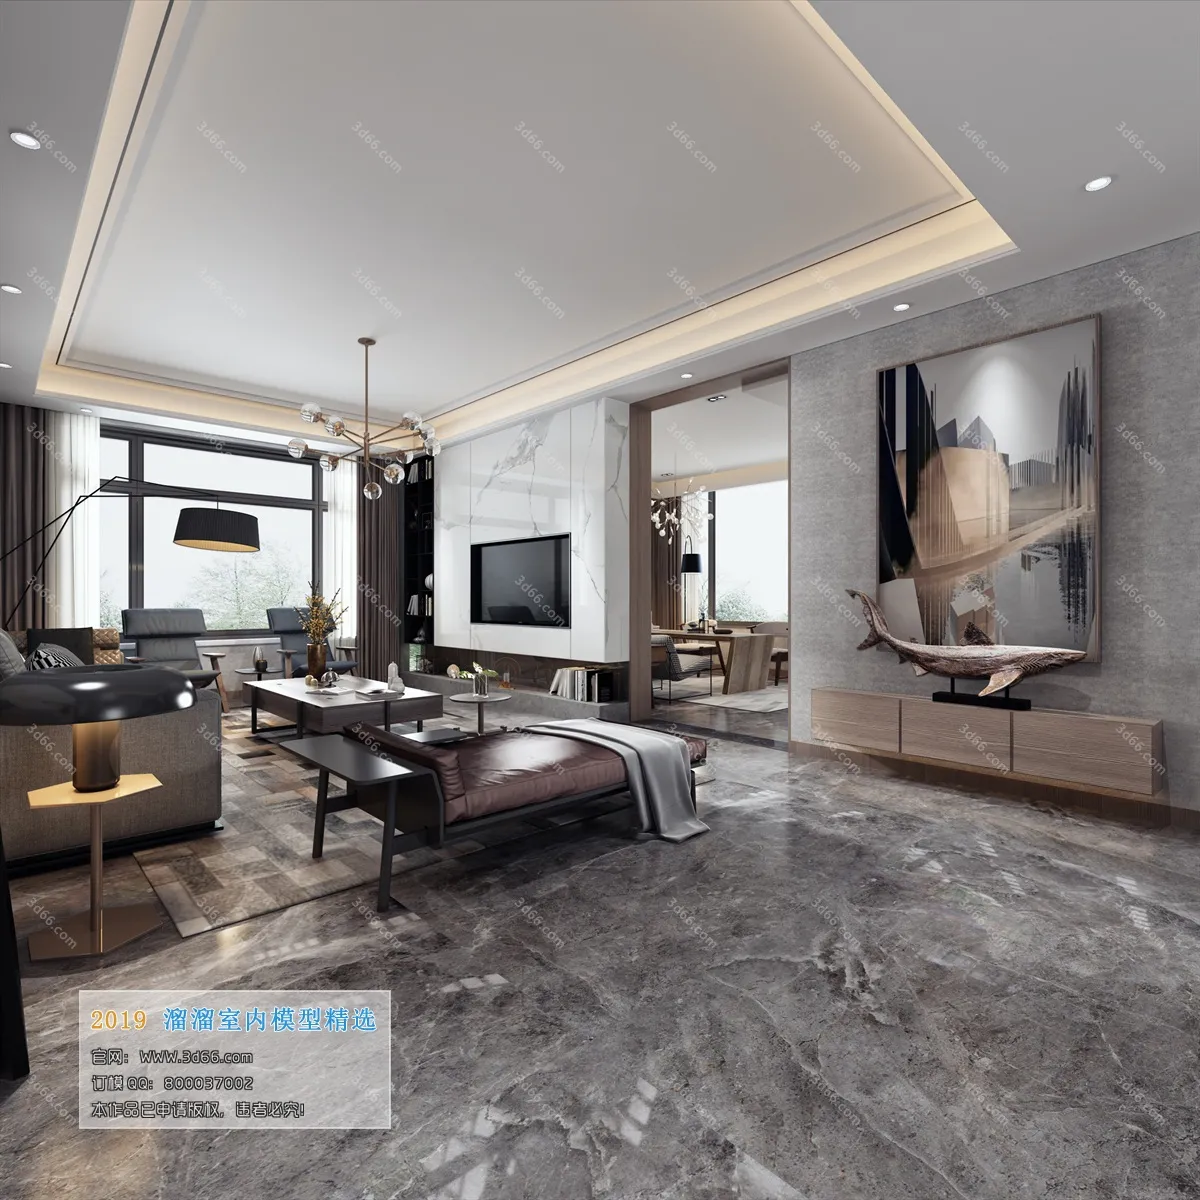 LIVING ROOM 3D MODELS – A013-Modern style – 13